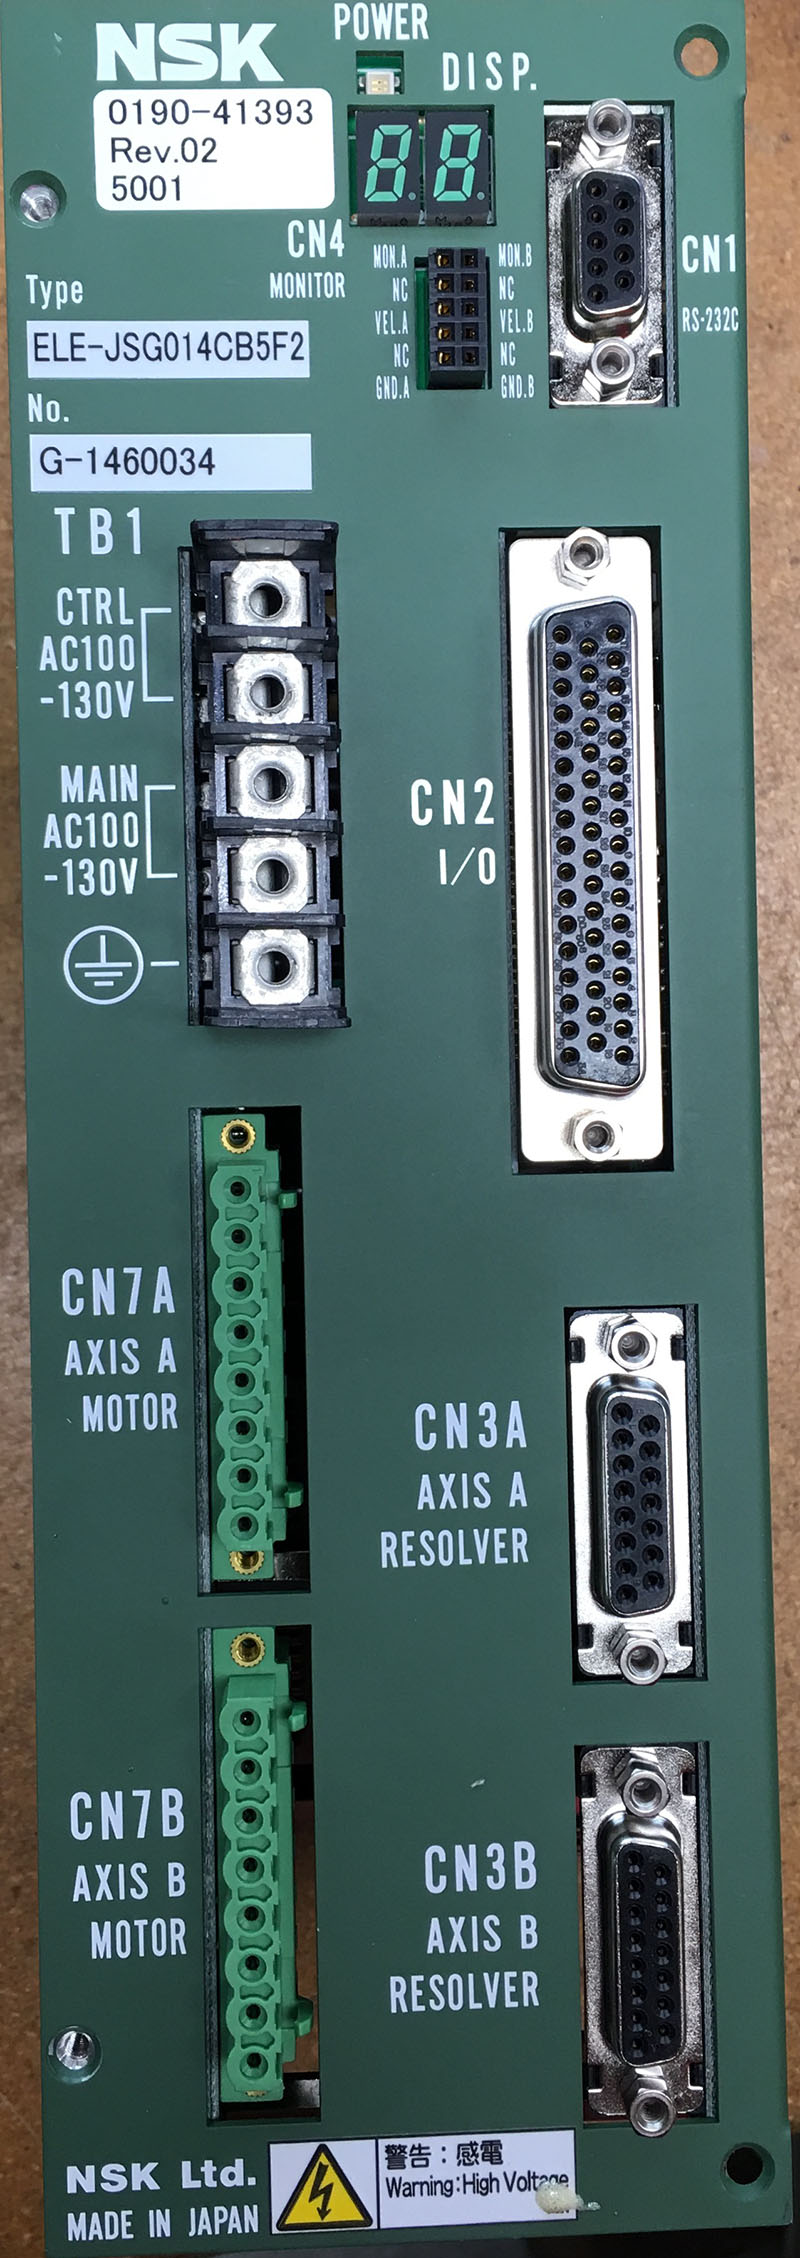 0190-41393 | NSK CMP Controller